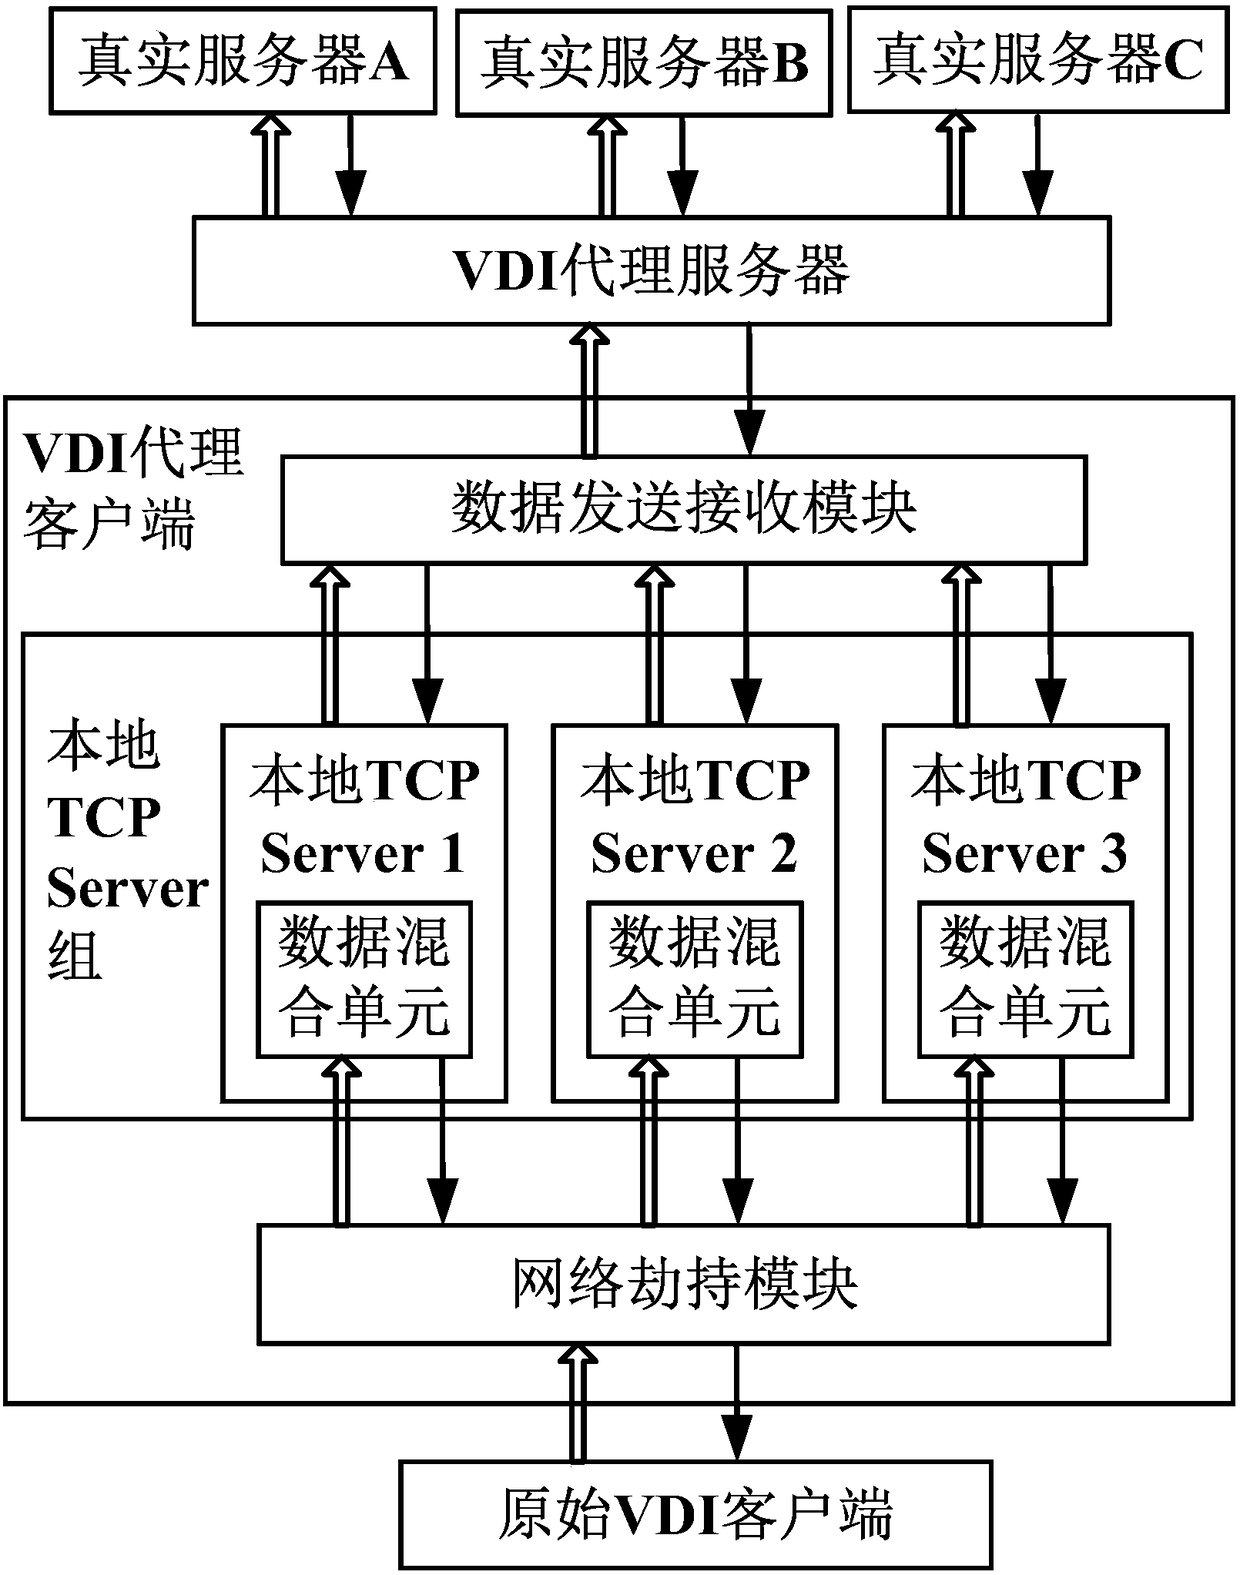 Single-channel VDI (Virtual Desktop Infrastructure) proxy service system and implementation method